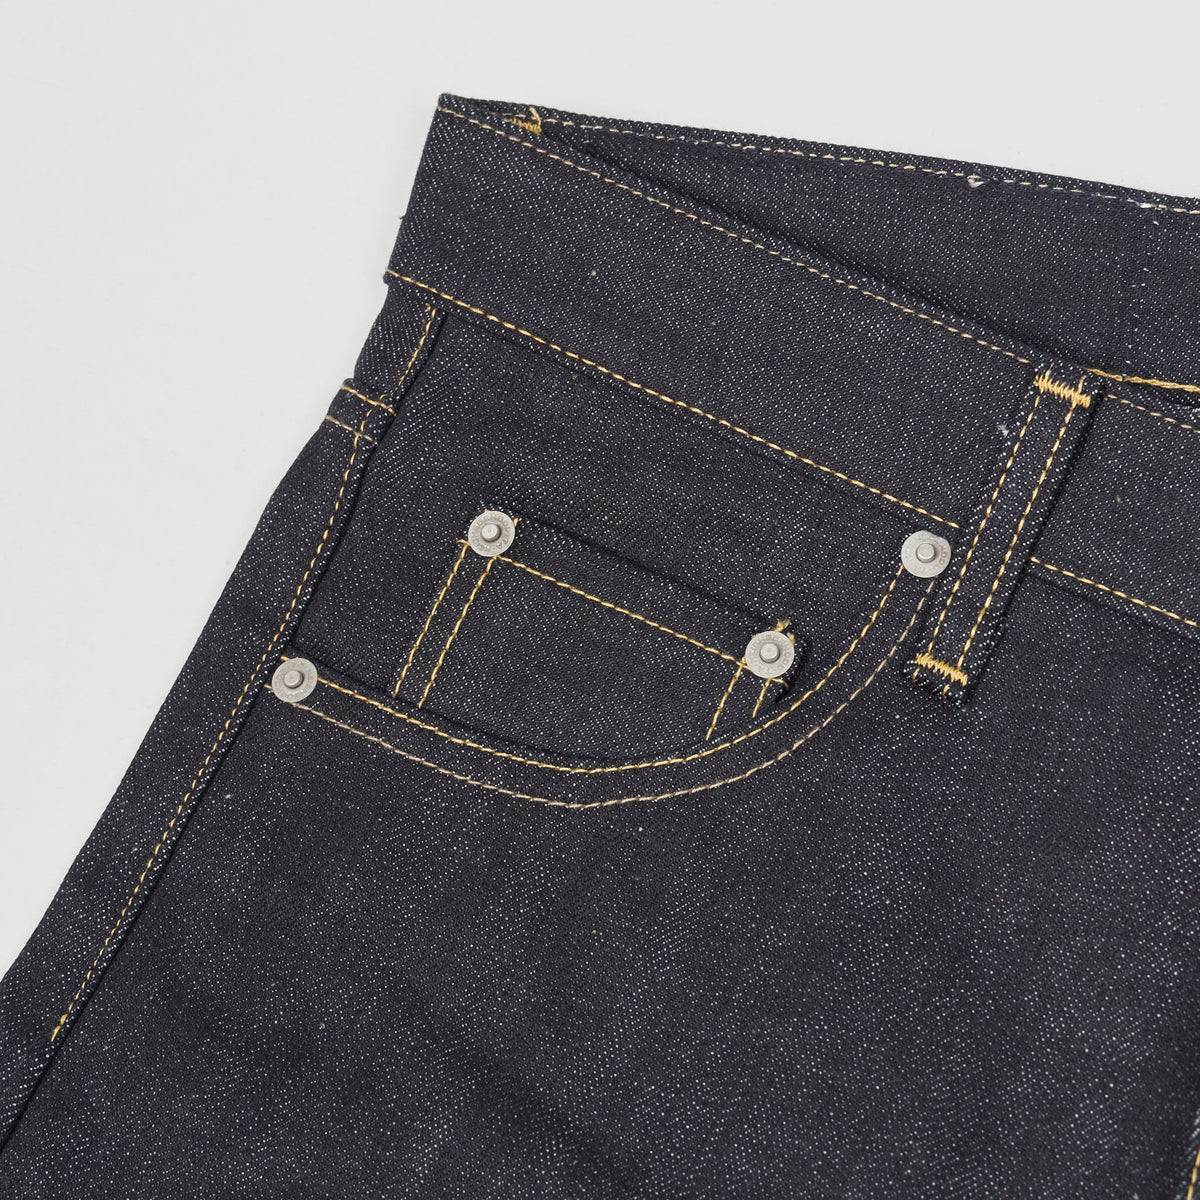 Neighborhood 5-Pocket Slim Narrow 14oz. Jeans